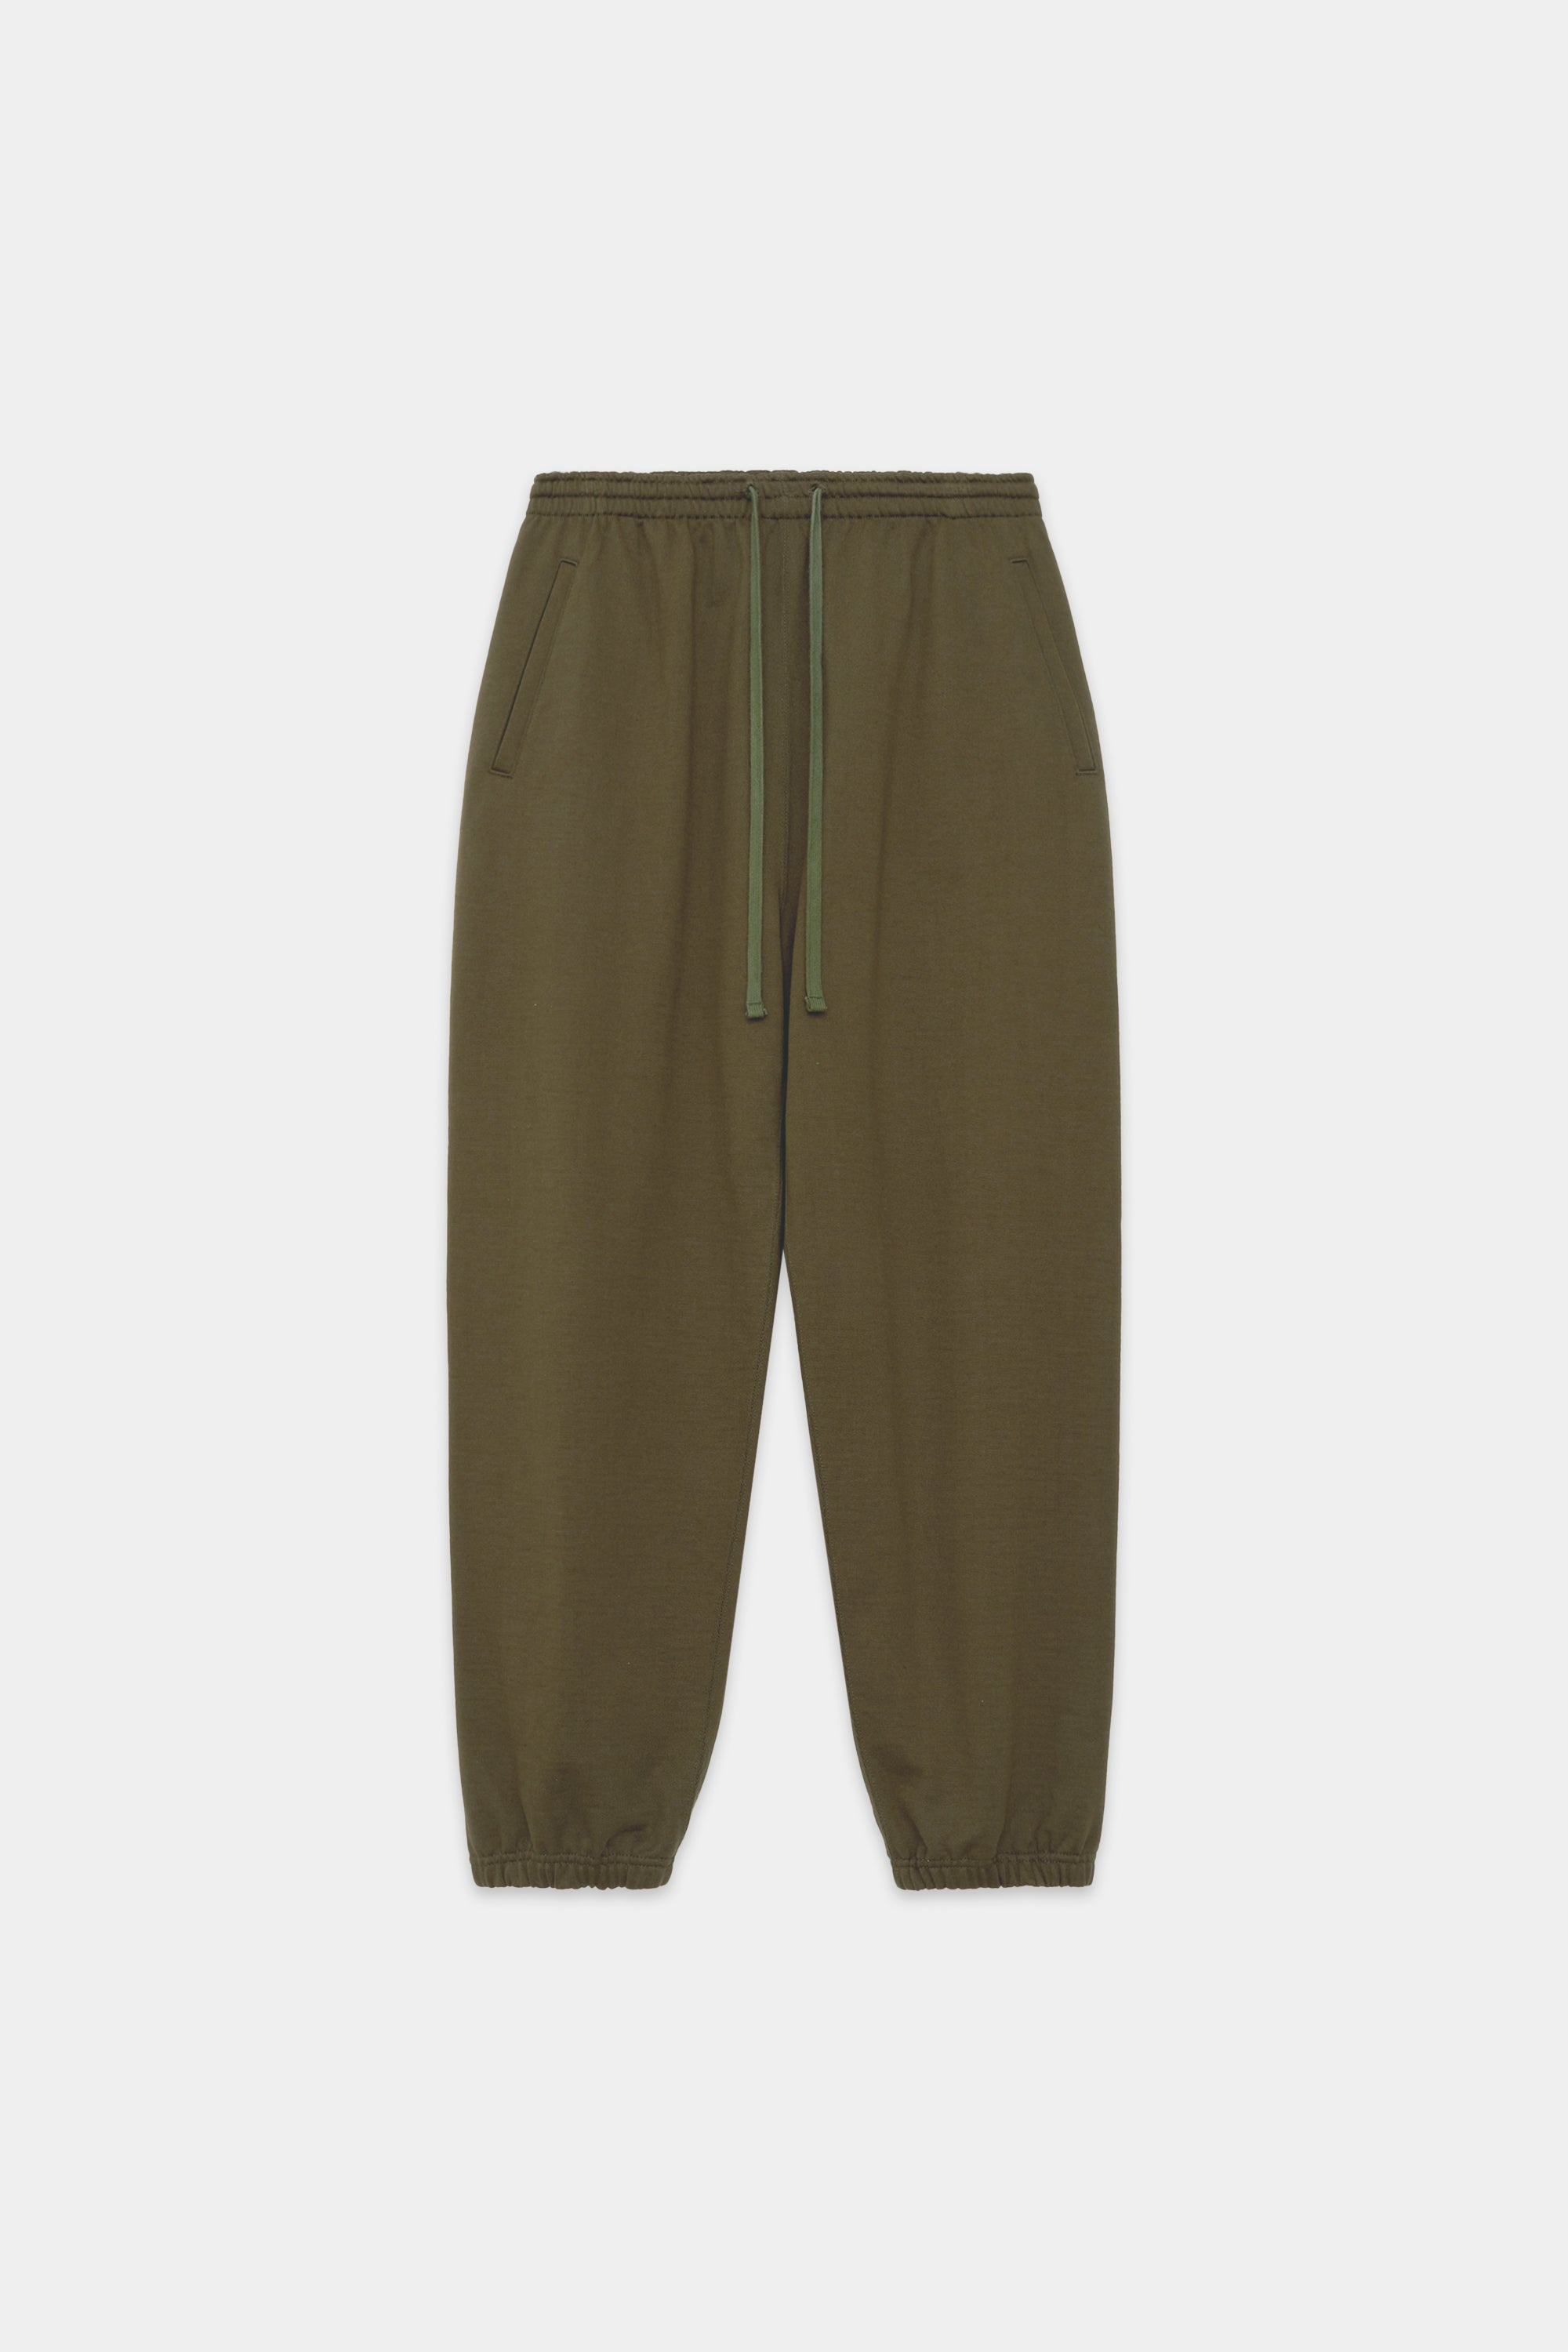 Long Workout Pants (Brown)-(Organic Cotton/Elastin)